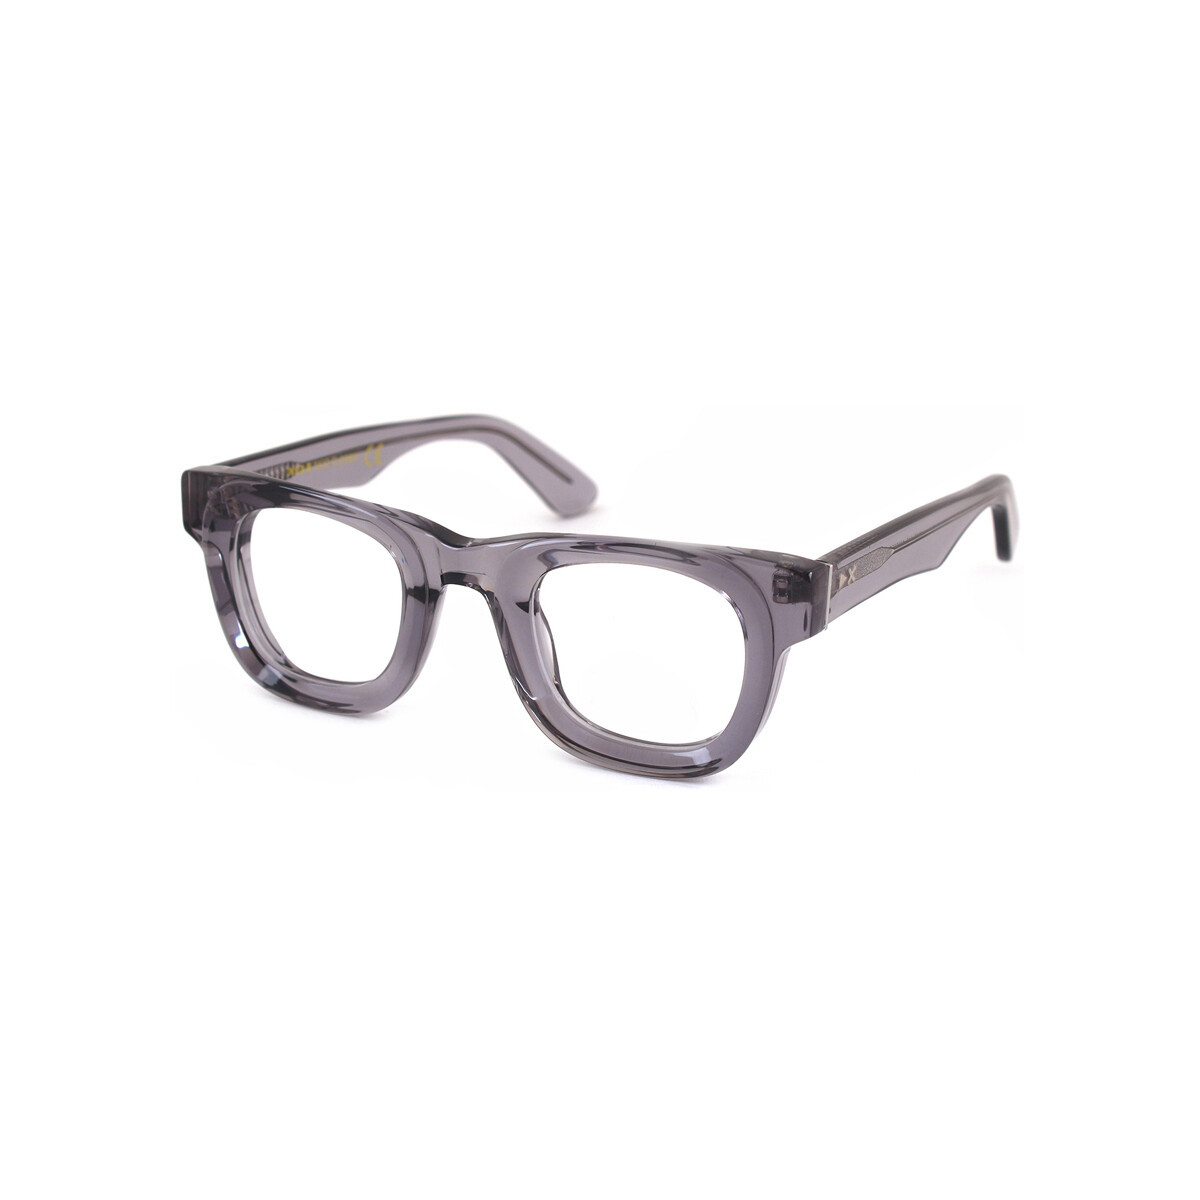 Orologi & Gioielli Occhiali da sole Xlab FLORES antiriflesso Occhiali Vista, Trasparente grigio, Grigio